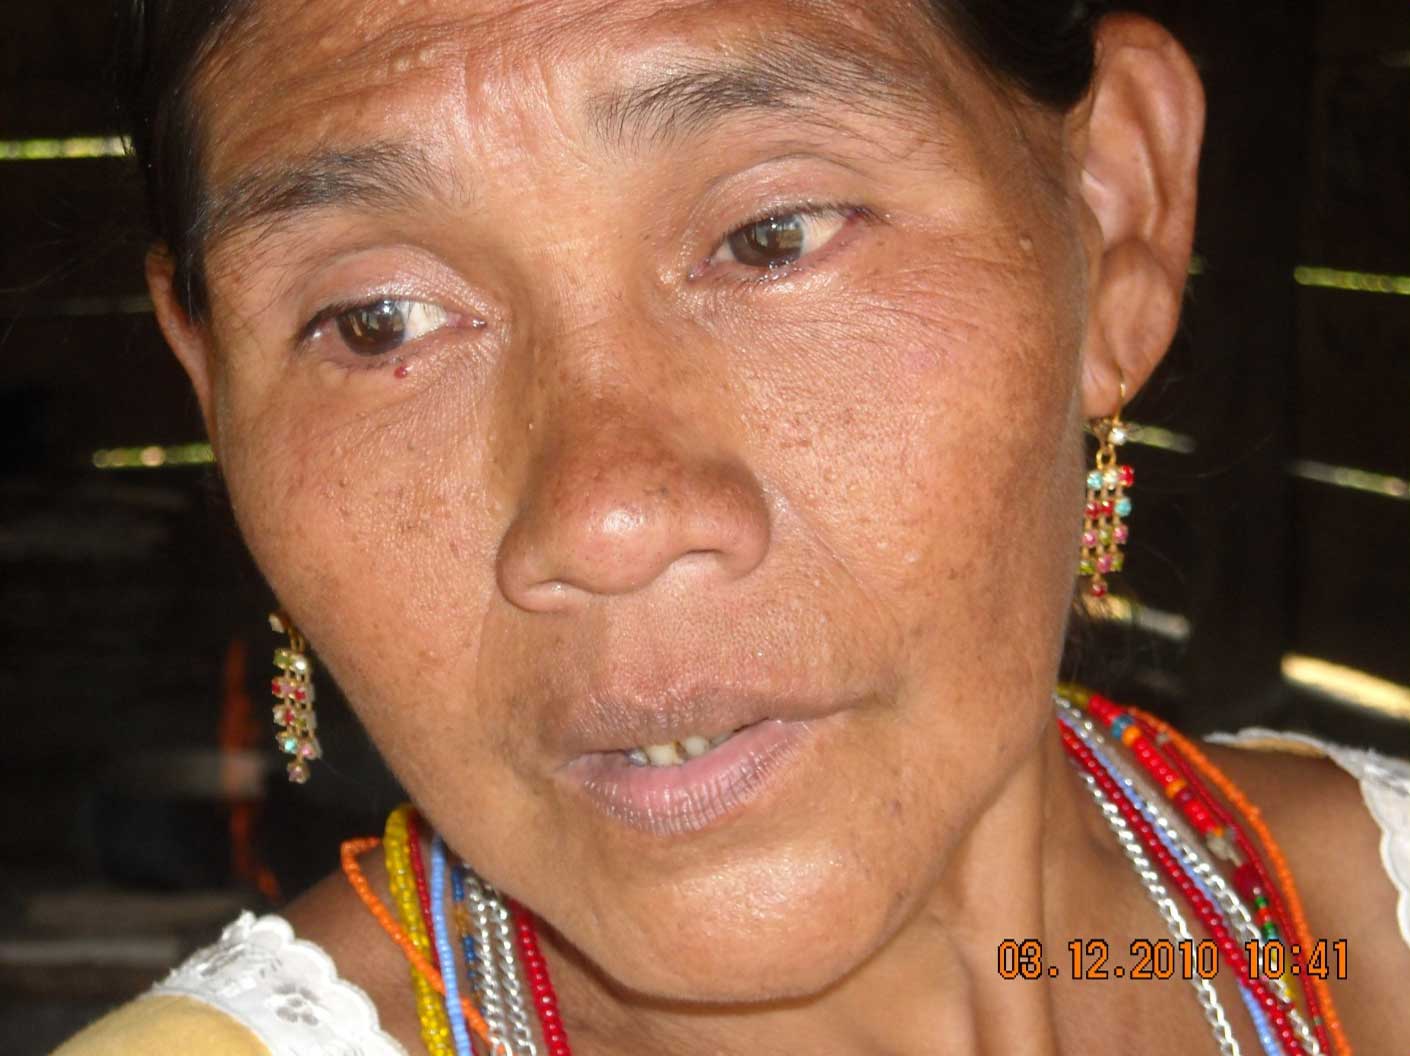 A Guatemalan midwife